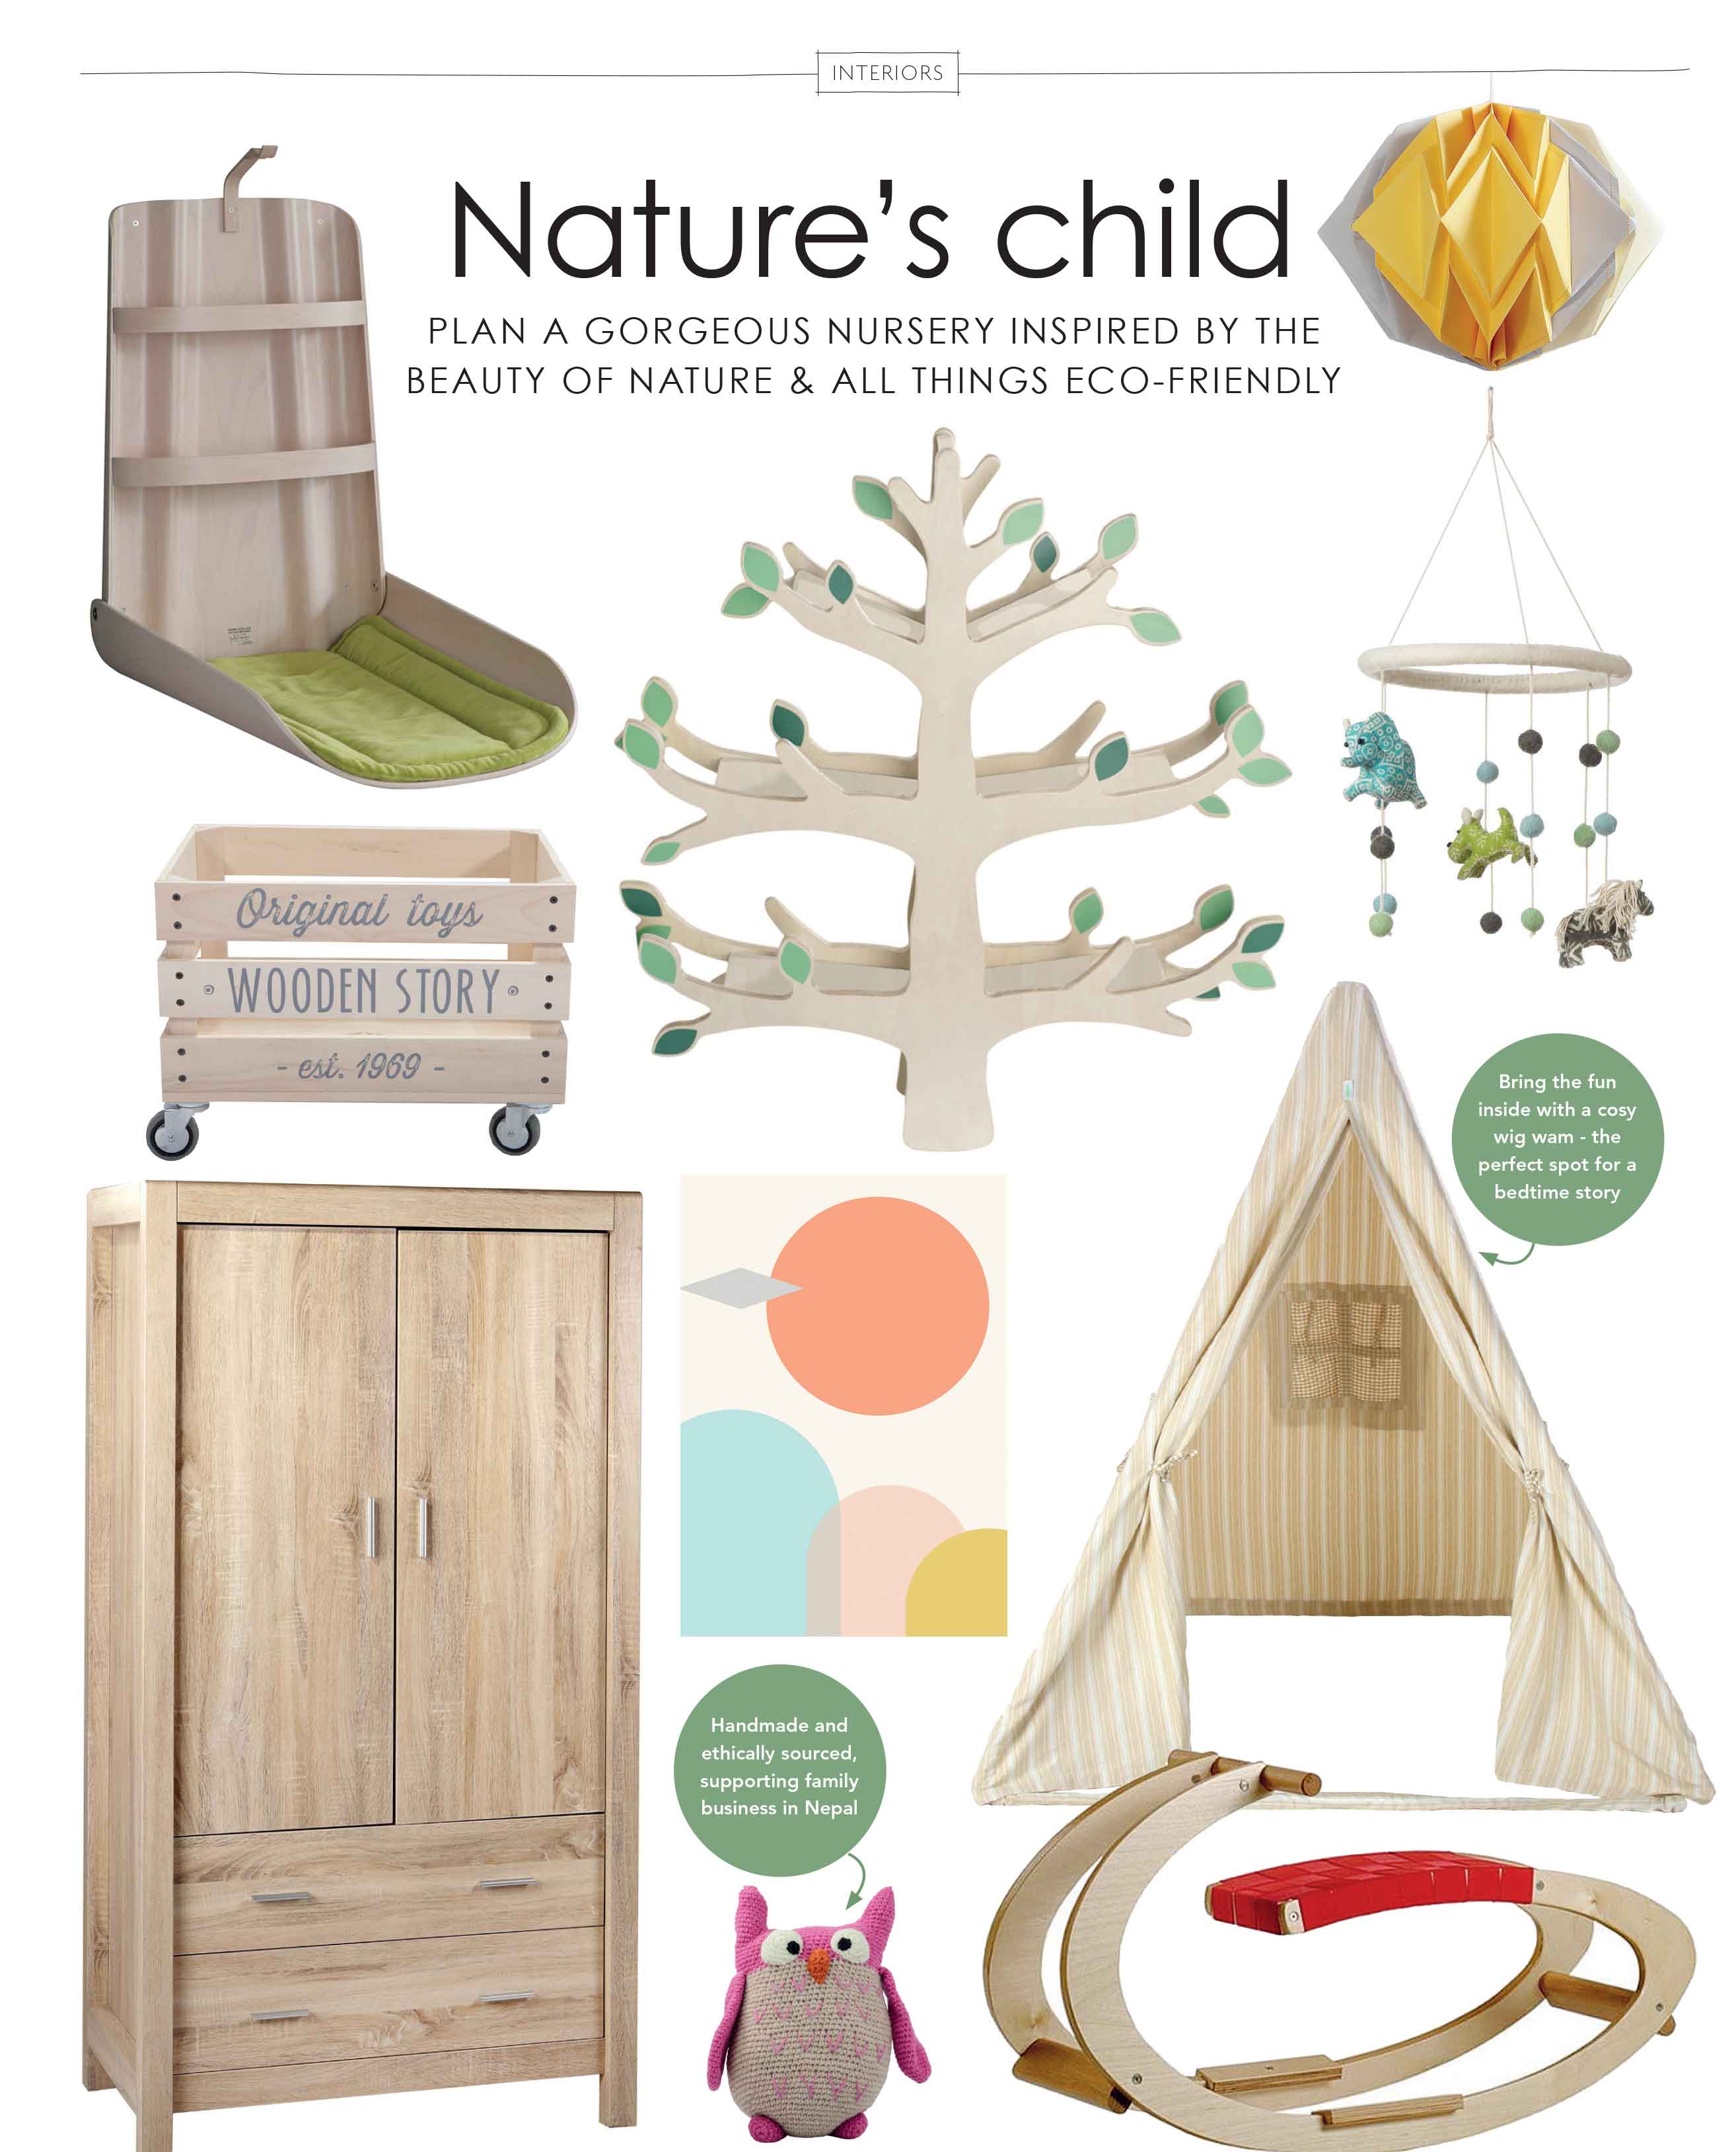 Natures child nursery